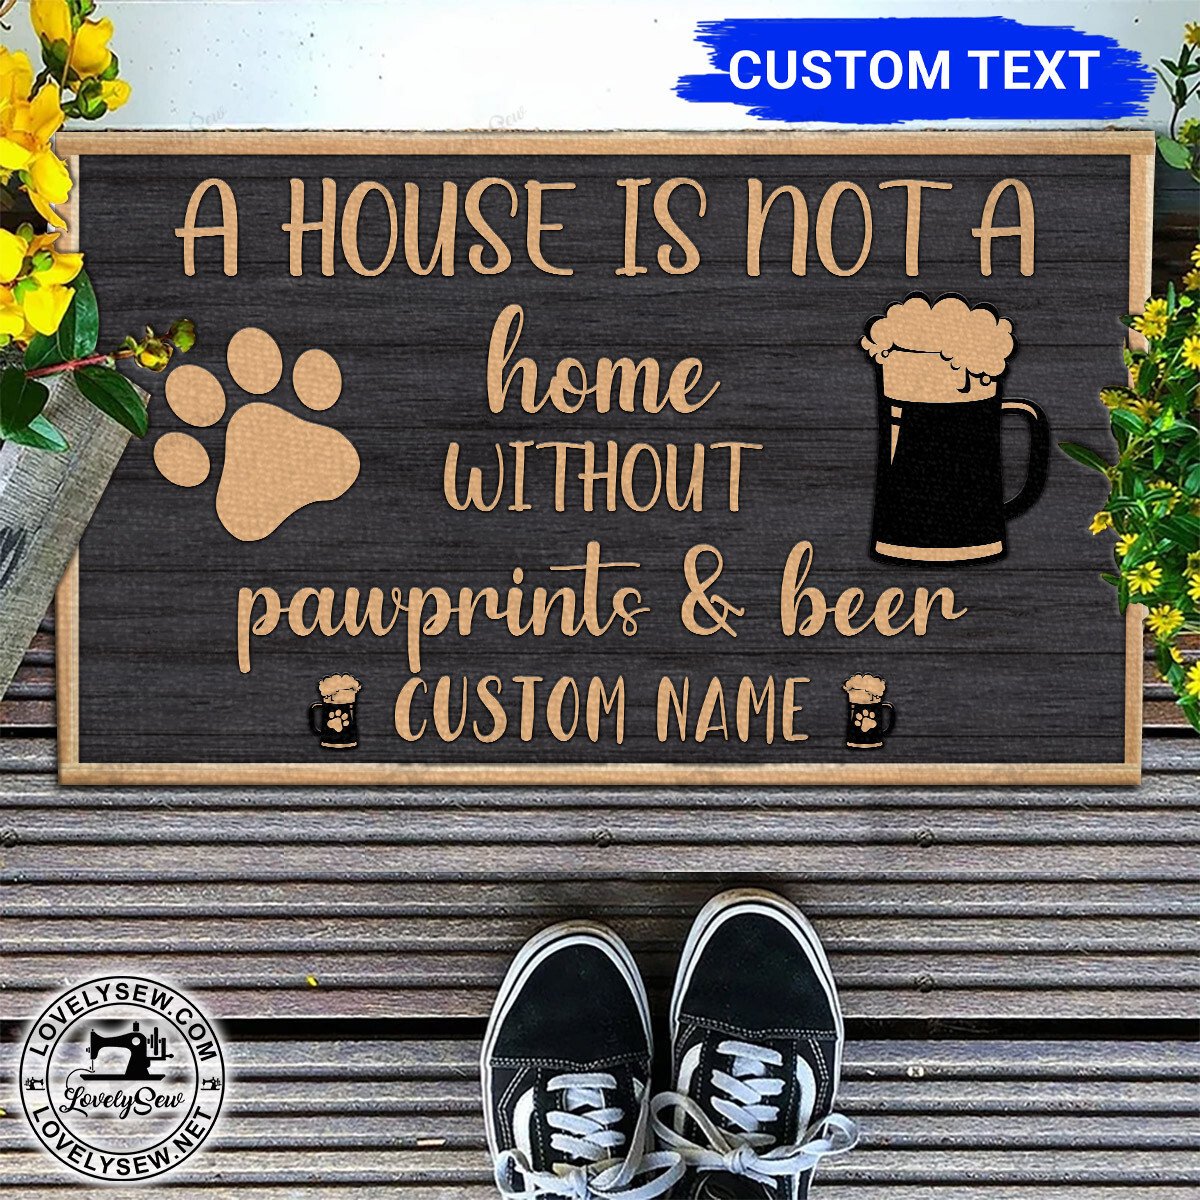 74 Custom Name Pawprints and Beer Brown and Black Doormat